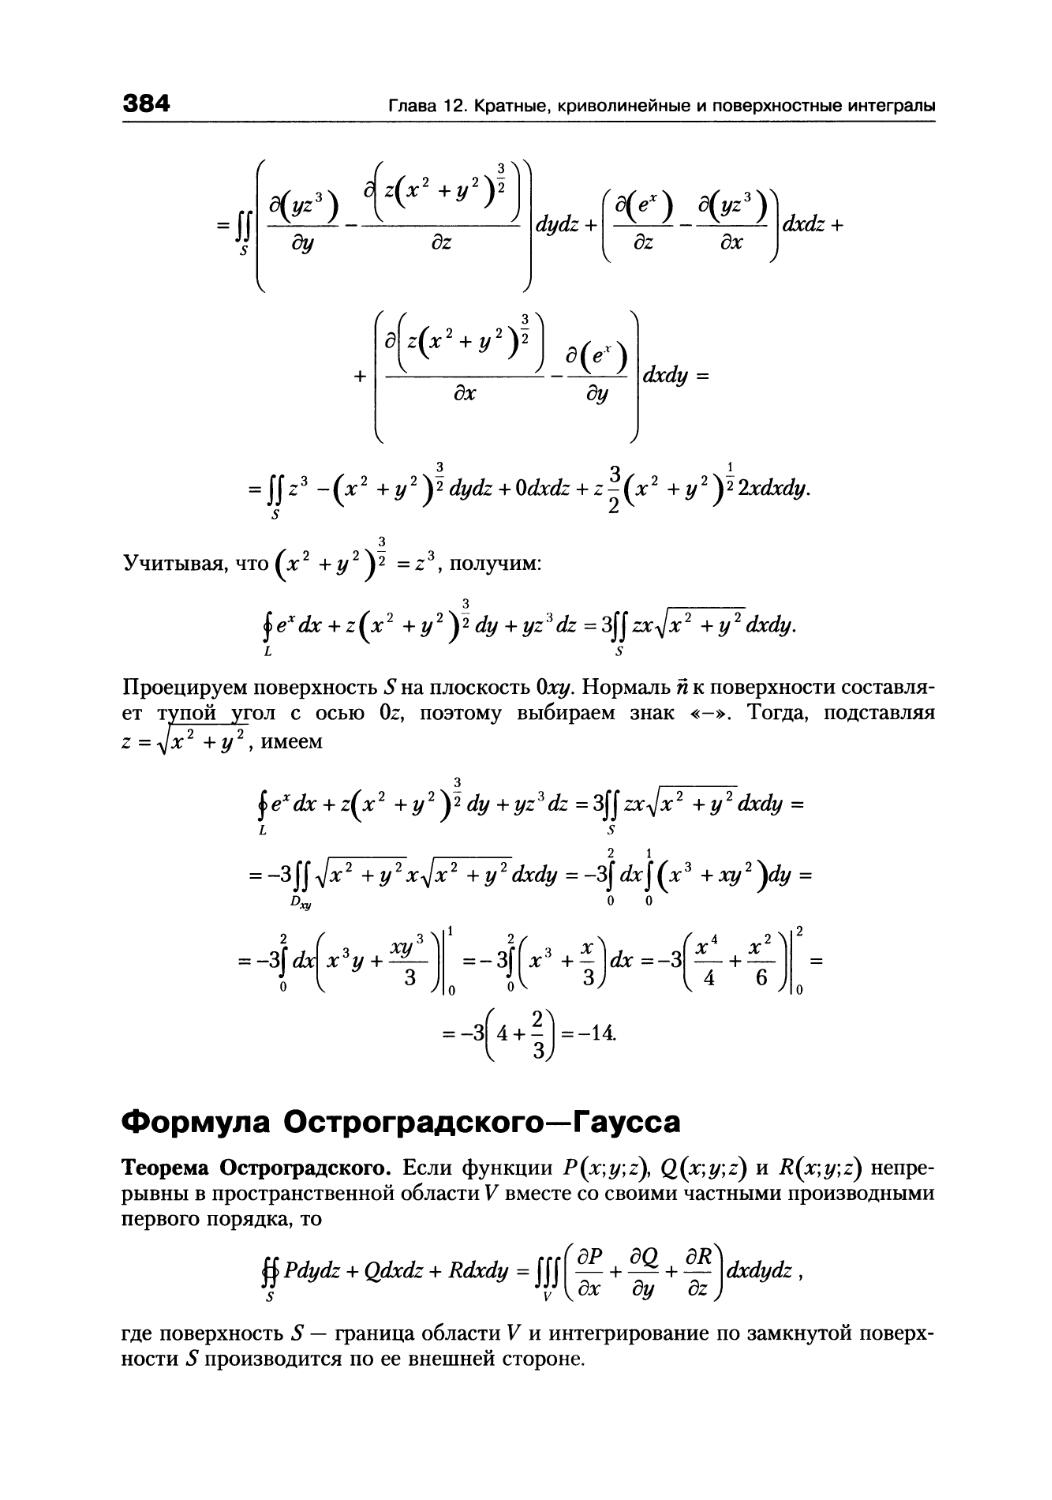 Формула Остроградского — Гаусса